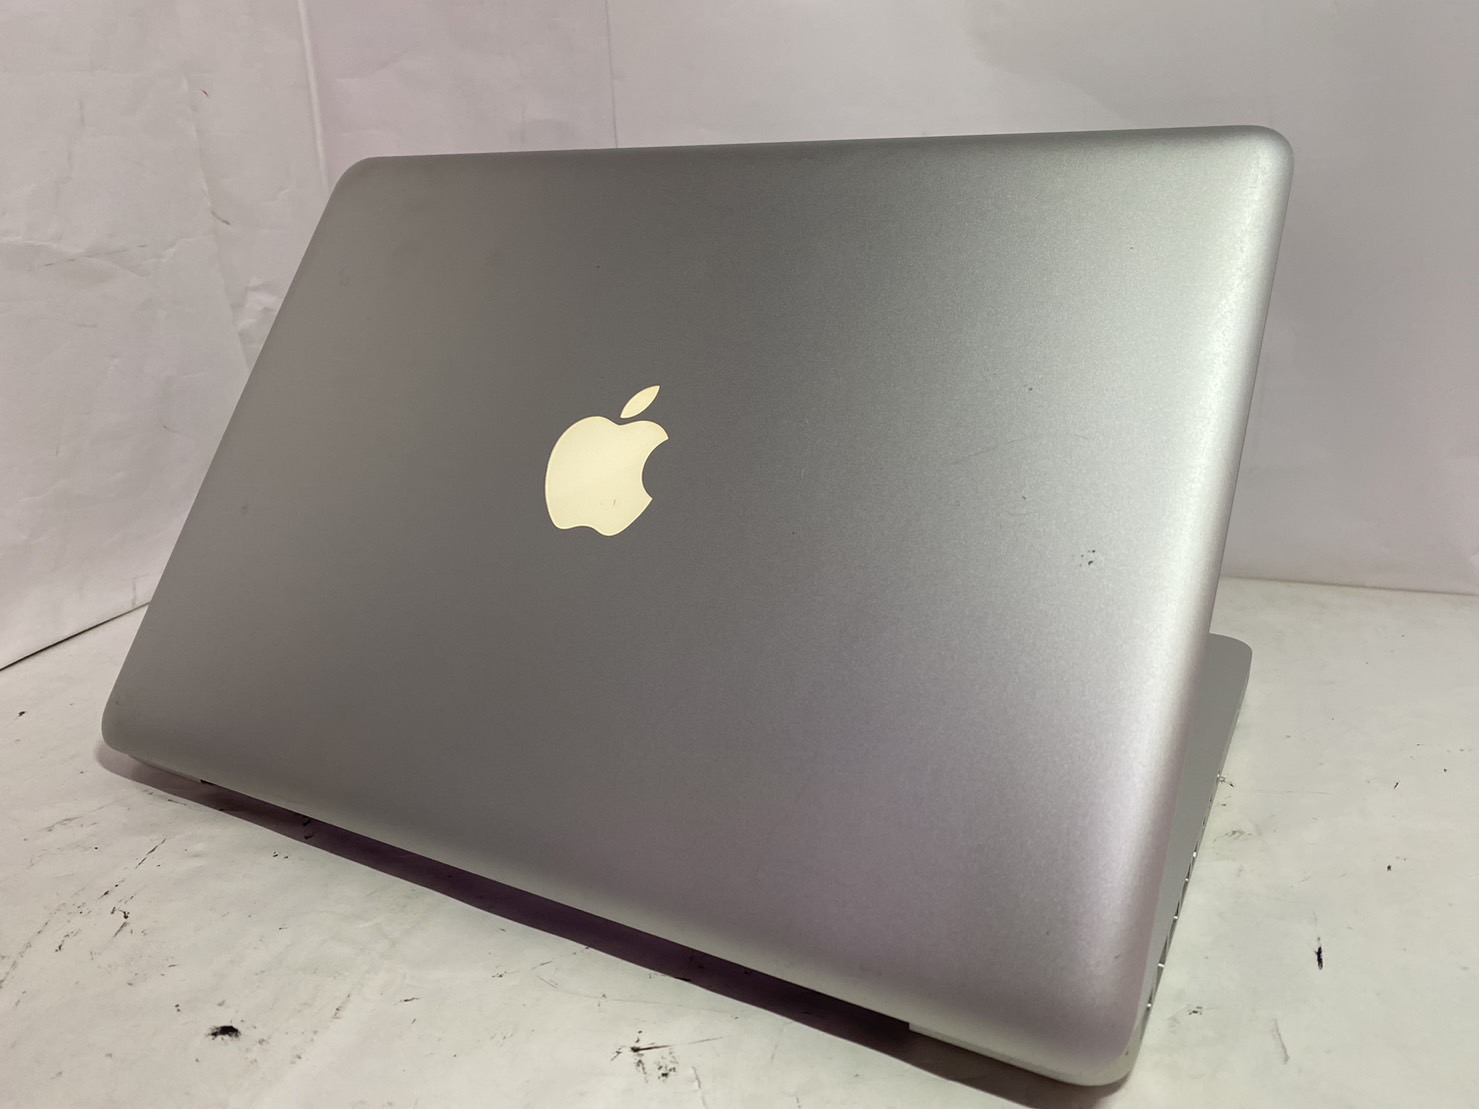 APPLE(アップル) MacBook (13-inch, Aluminum, Late 2008) A1278の激安 